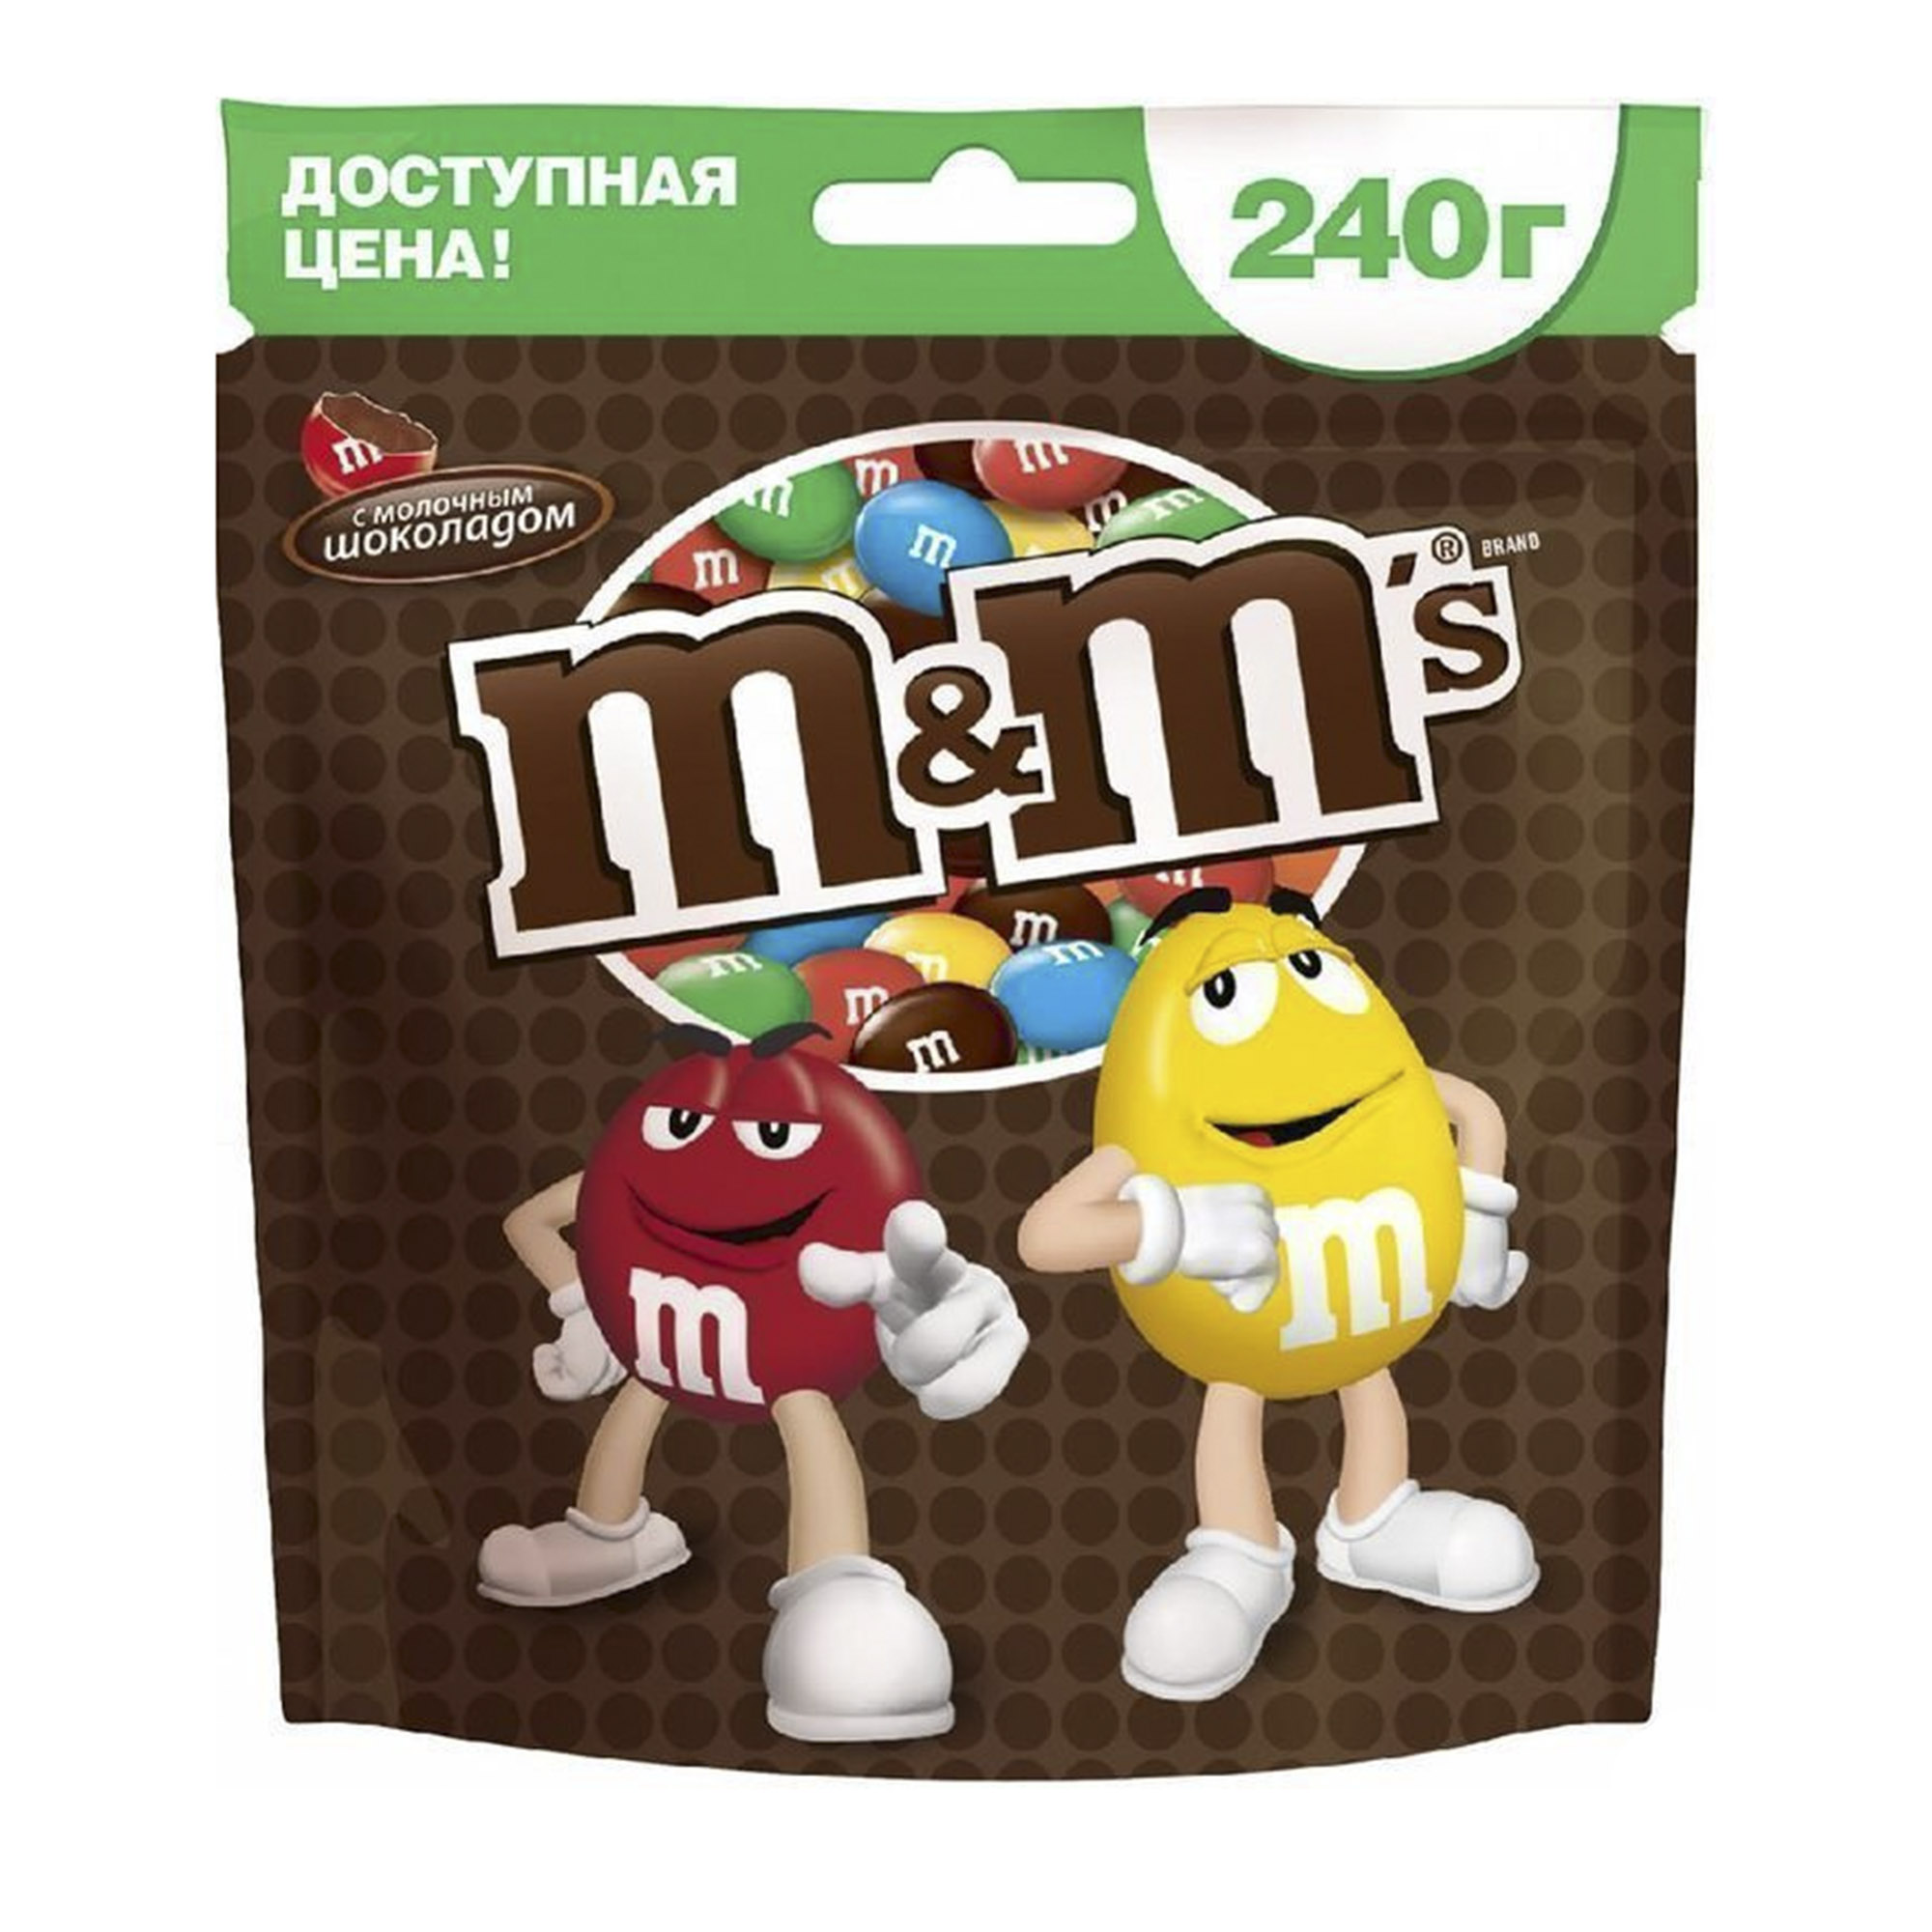 Ммдс шоколад